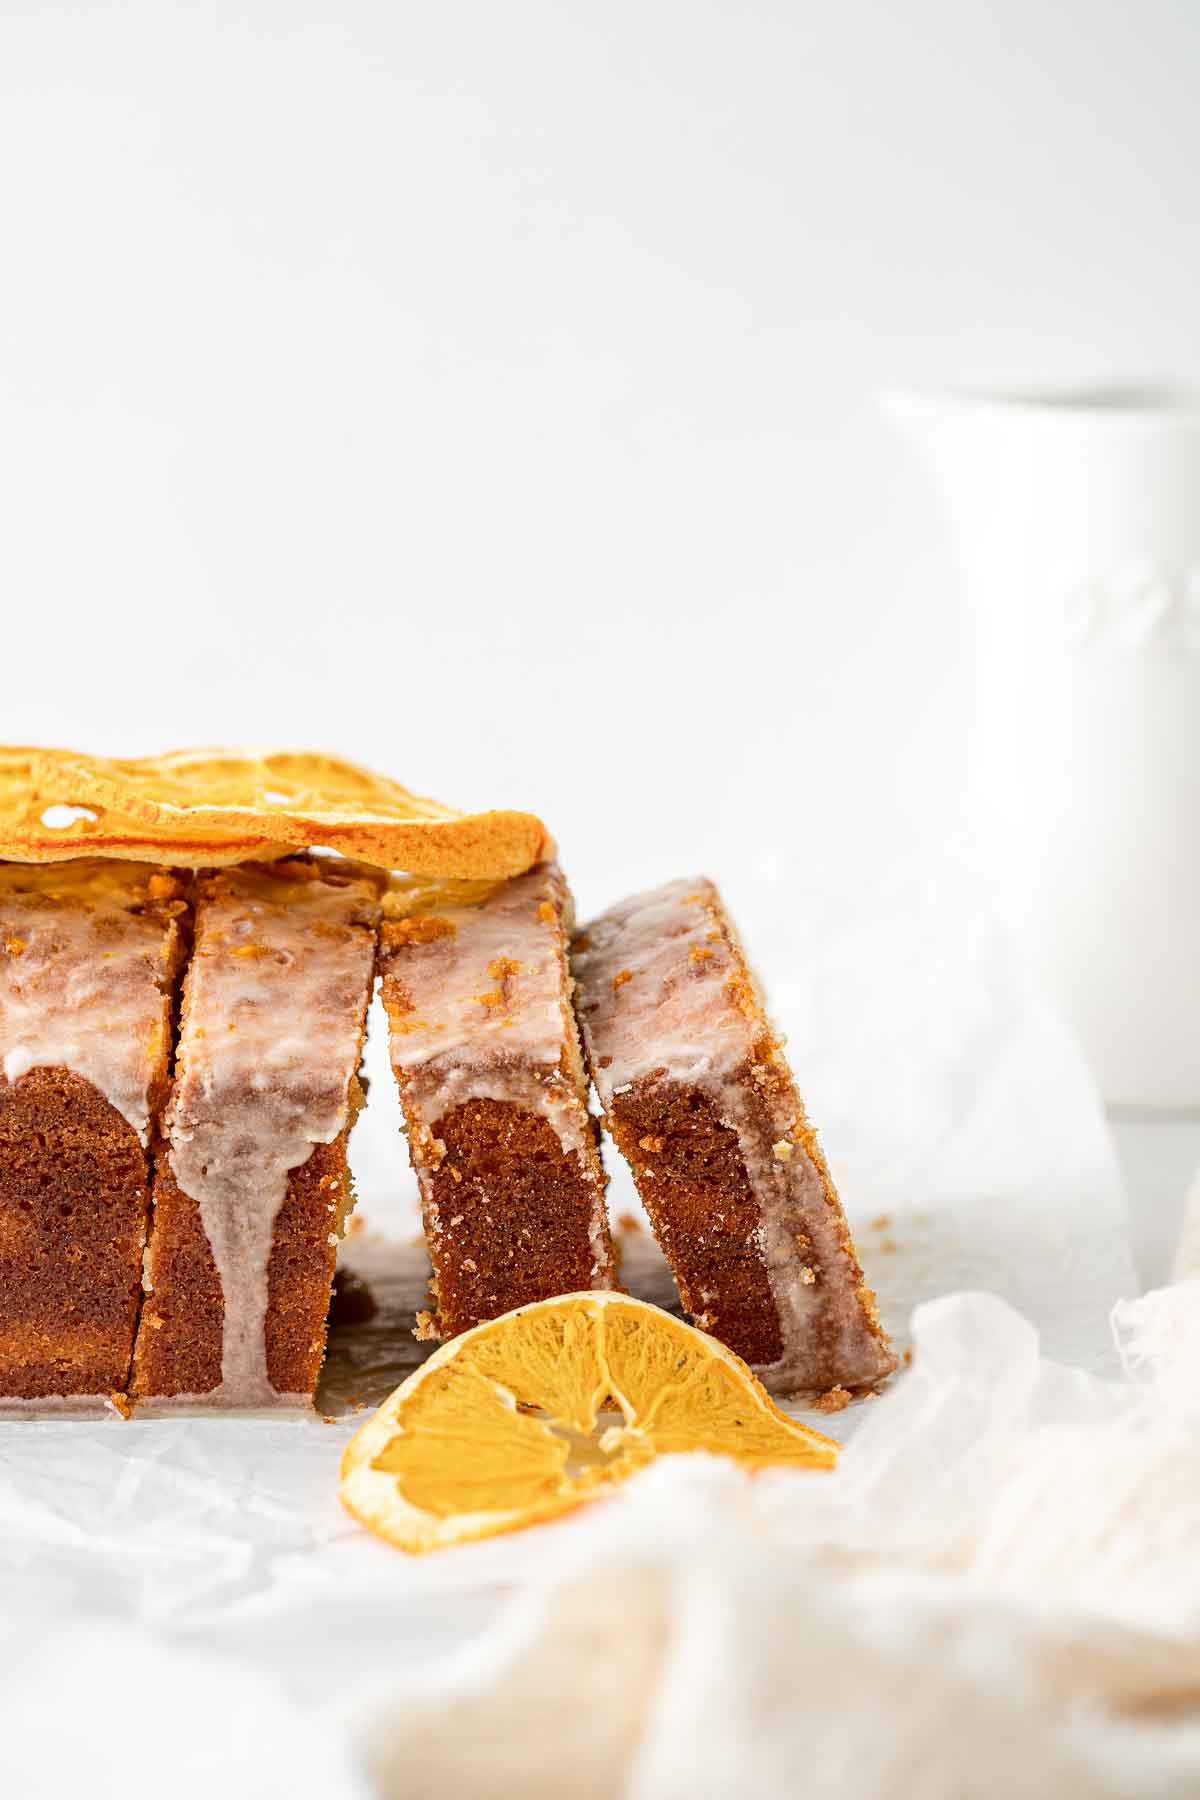 Slices of orange pound cake.